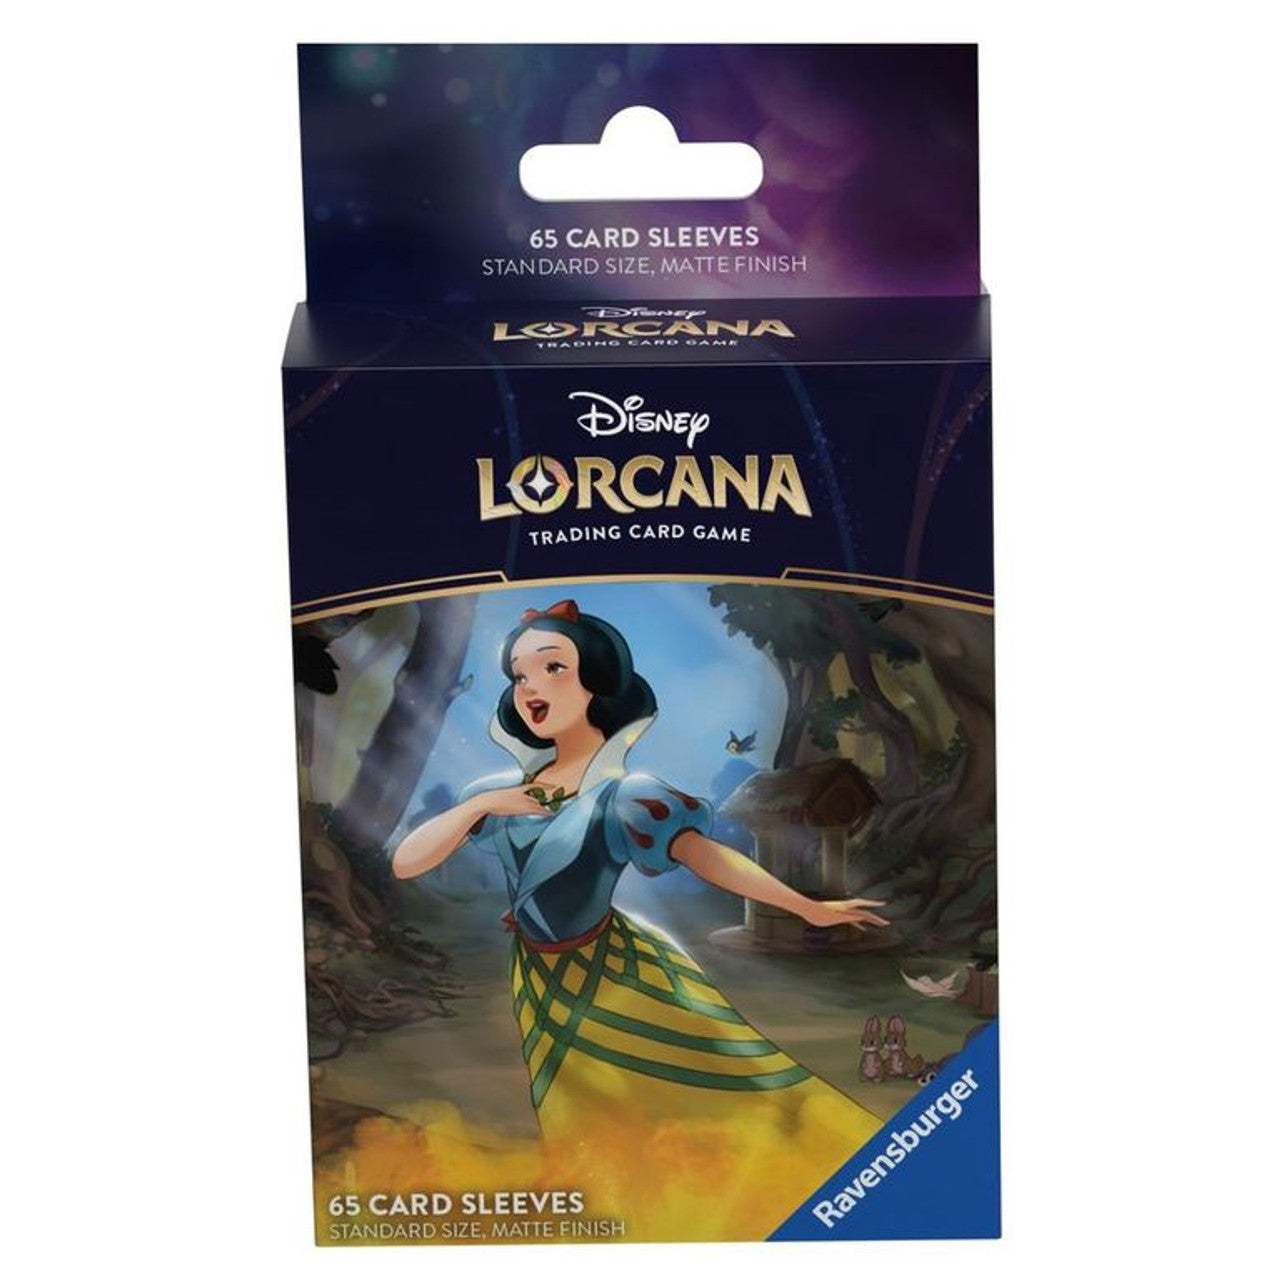 Lorcana TCG Ursula's Return Card Sleeves - Snow White MKUT4IV68K |0|